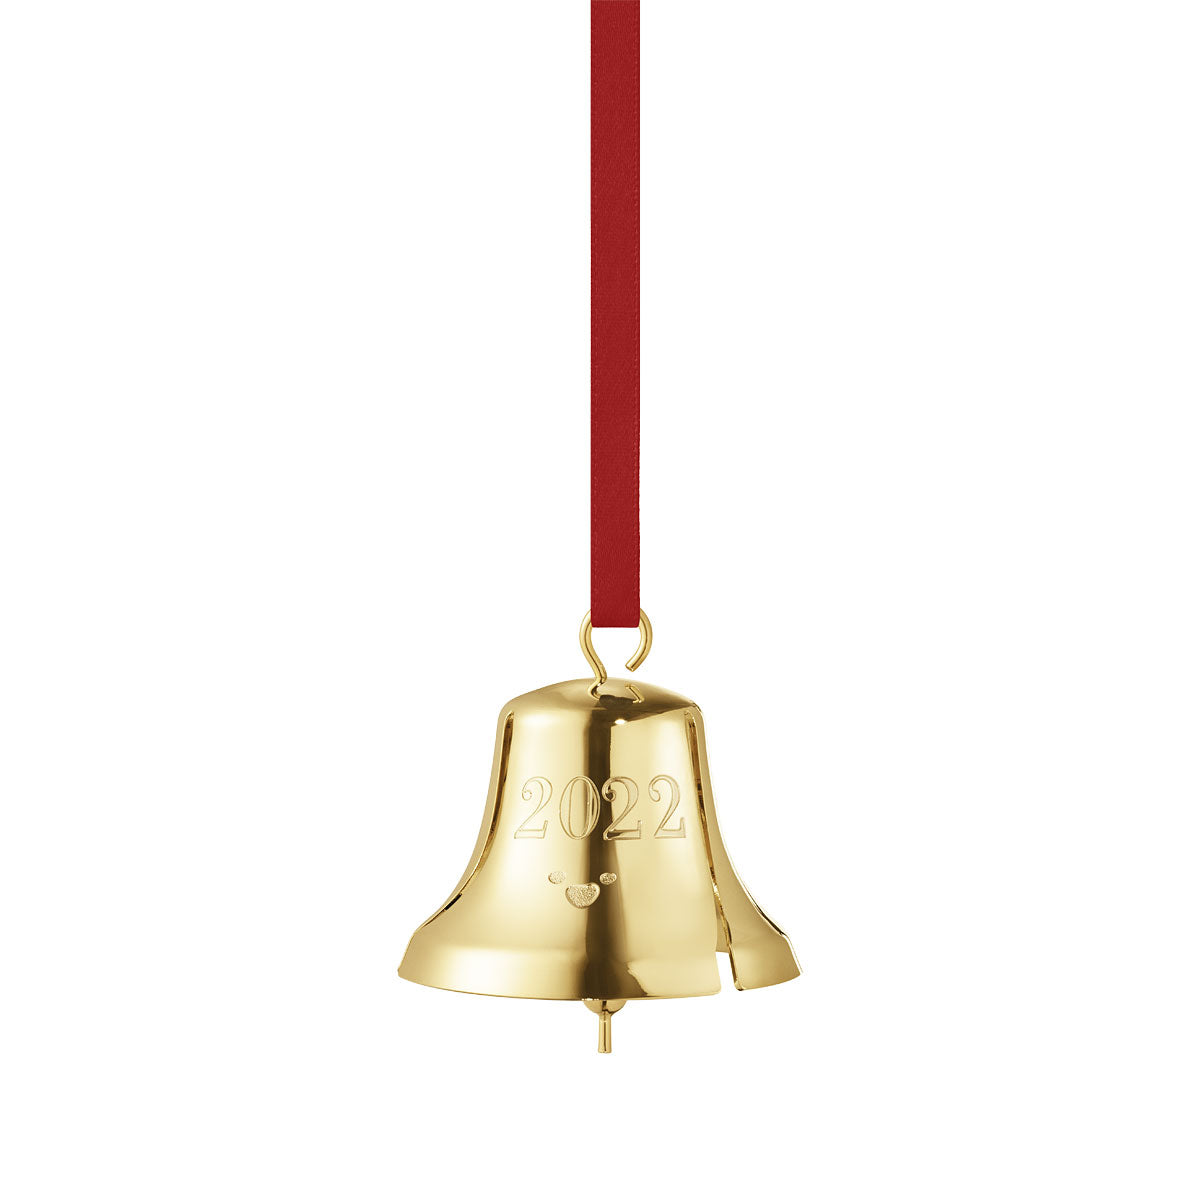 Georg Jensen 2022 Holiday Heart Bell Ornament - Kitchen Universe